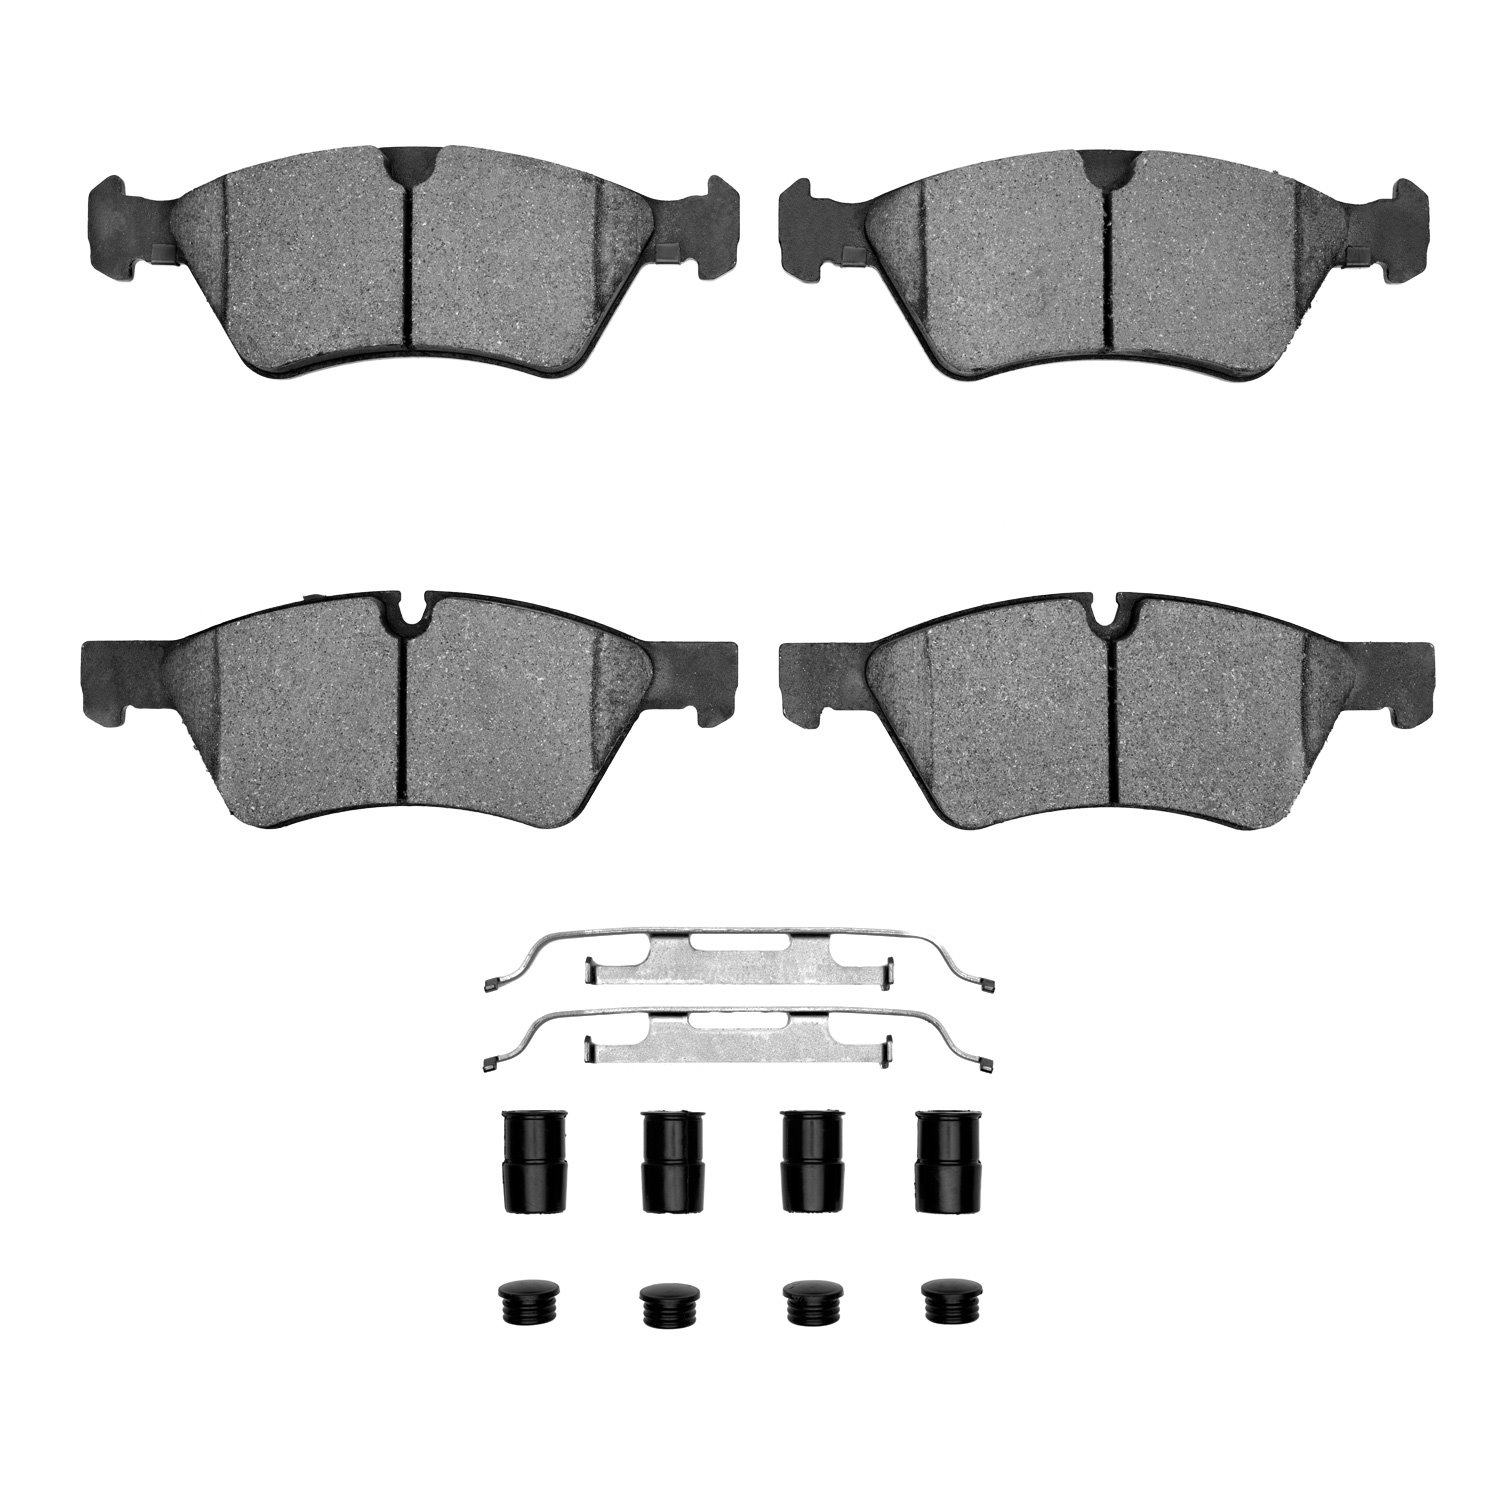 1600-1123-01 5000 Euro Ceramic Brake Pads & Hardware Kit, 2005-2012 Mercedes-Benz, Position: Front